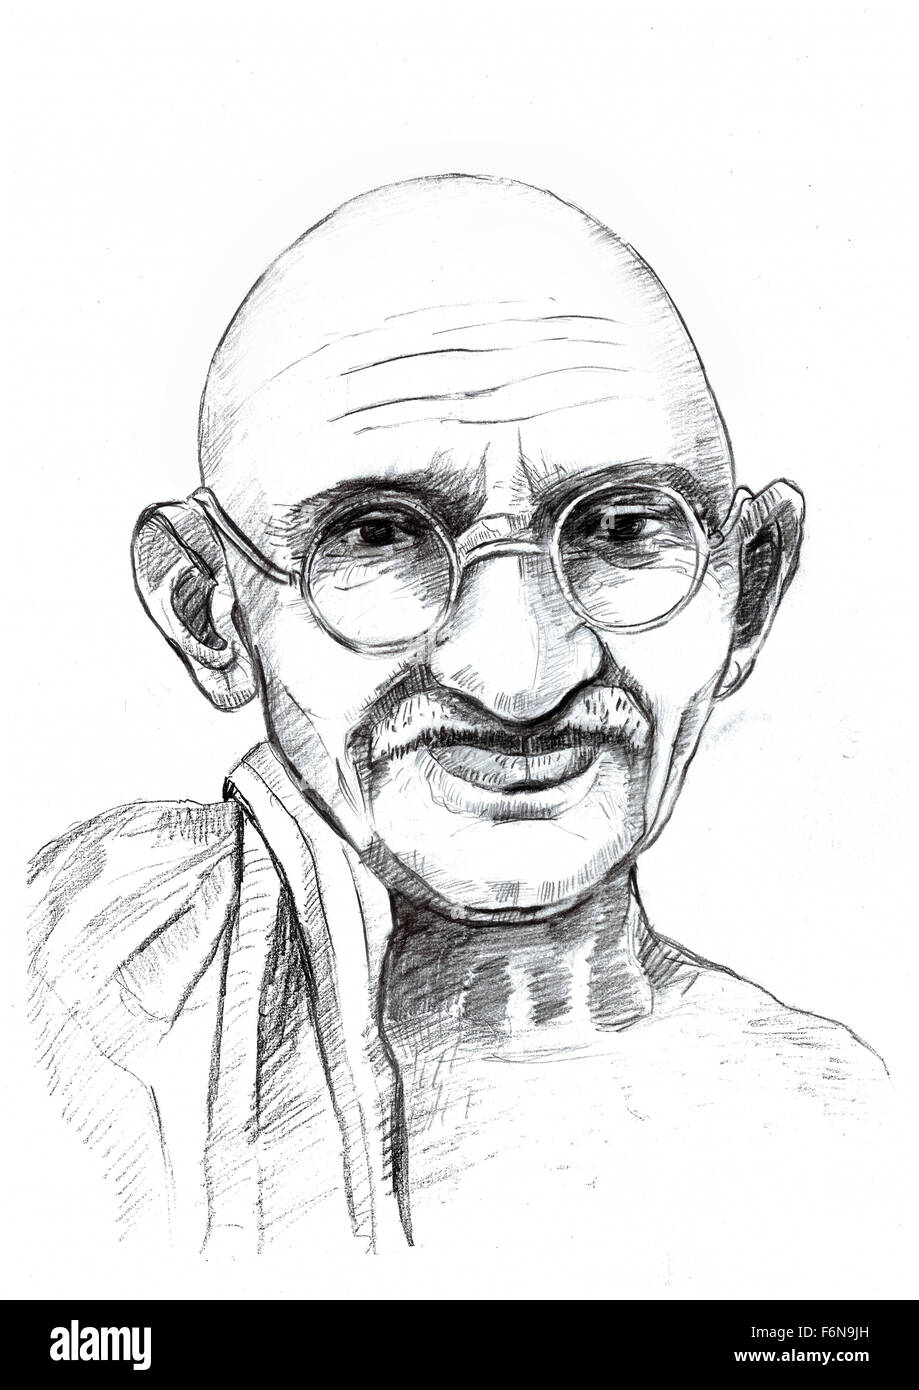 File:Mahatma Gandhi drawing.jpg - Wikimedia Commons